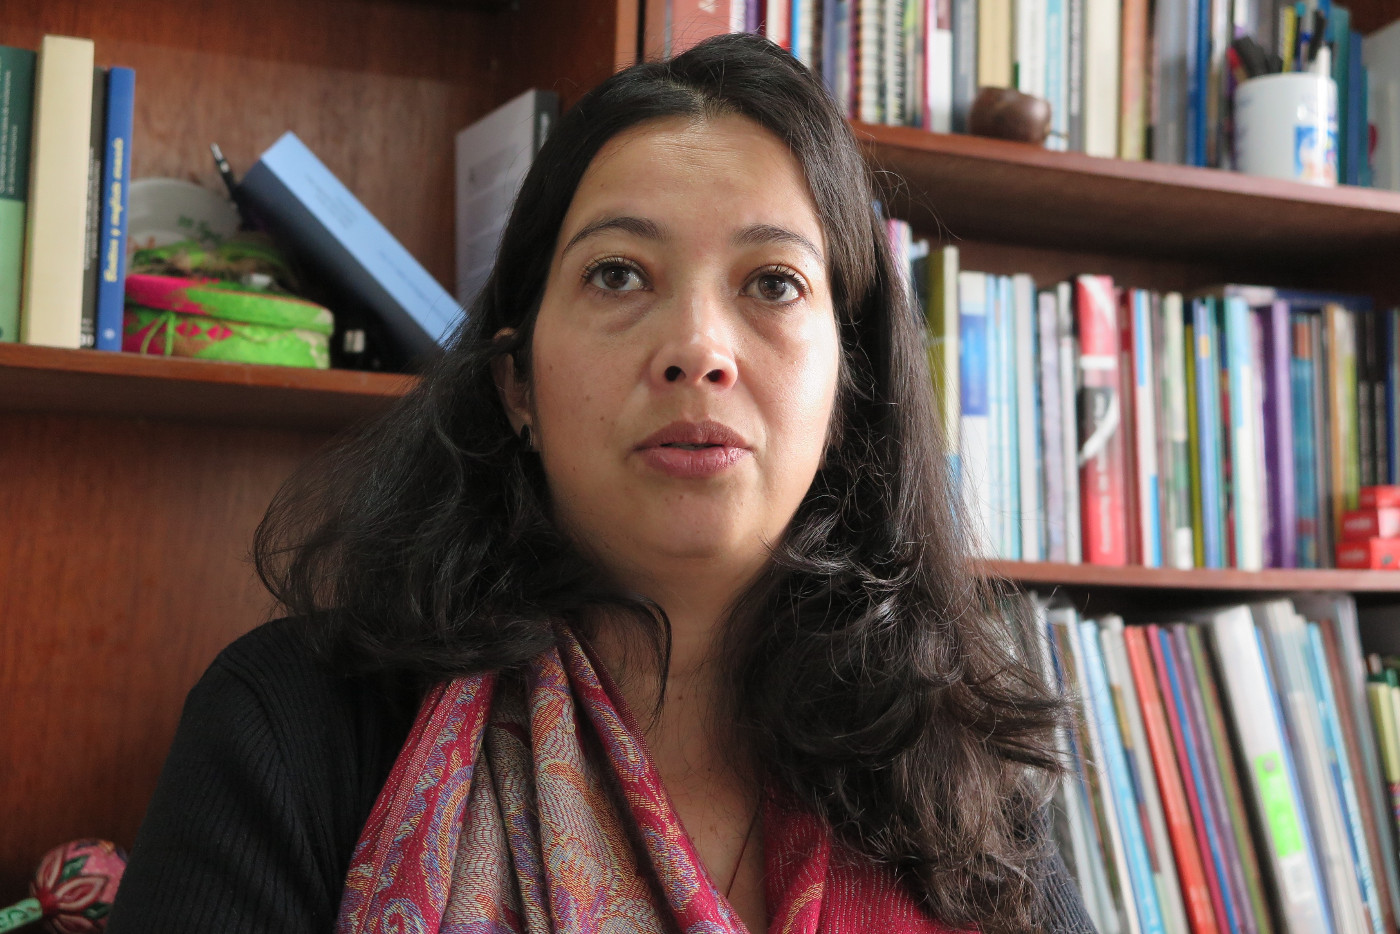 Linda Cabrera ist Direktorin der kolumbianischen Frauenrechtsorganisation "Sisma Mujer". Foto: Knut Henkel